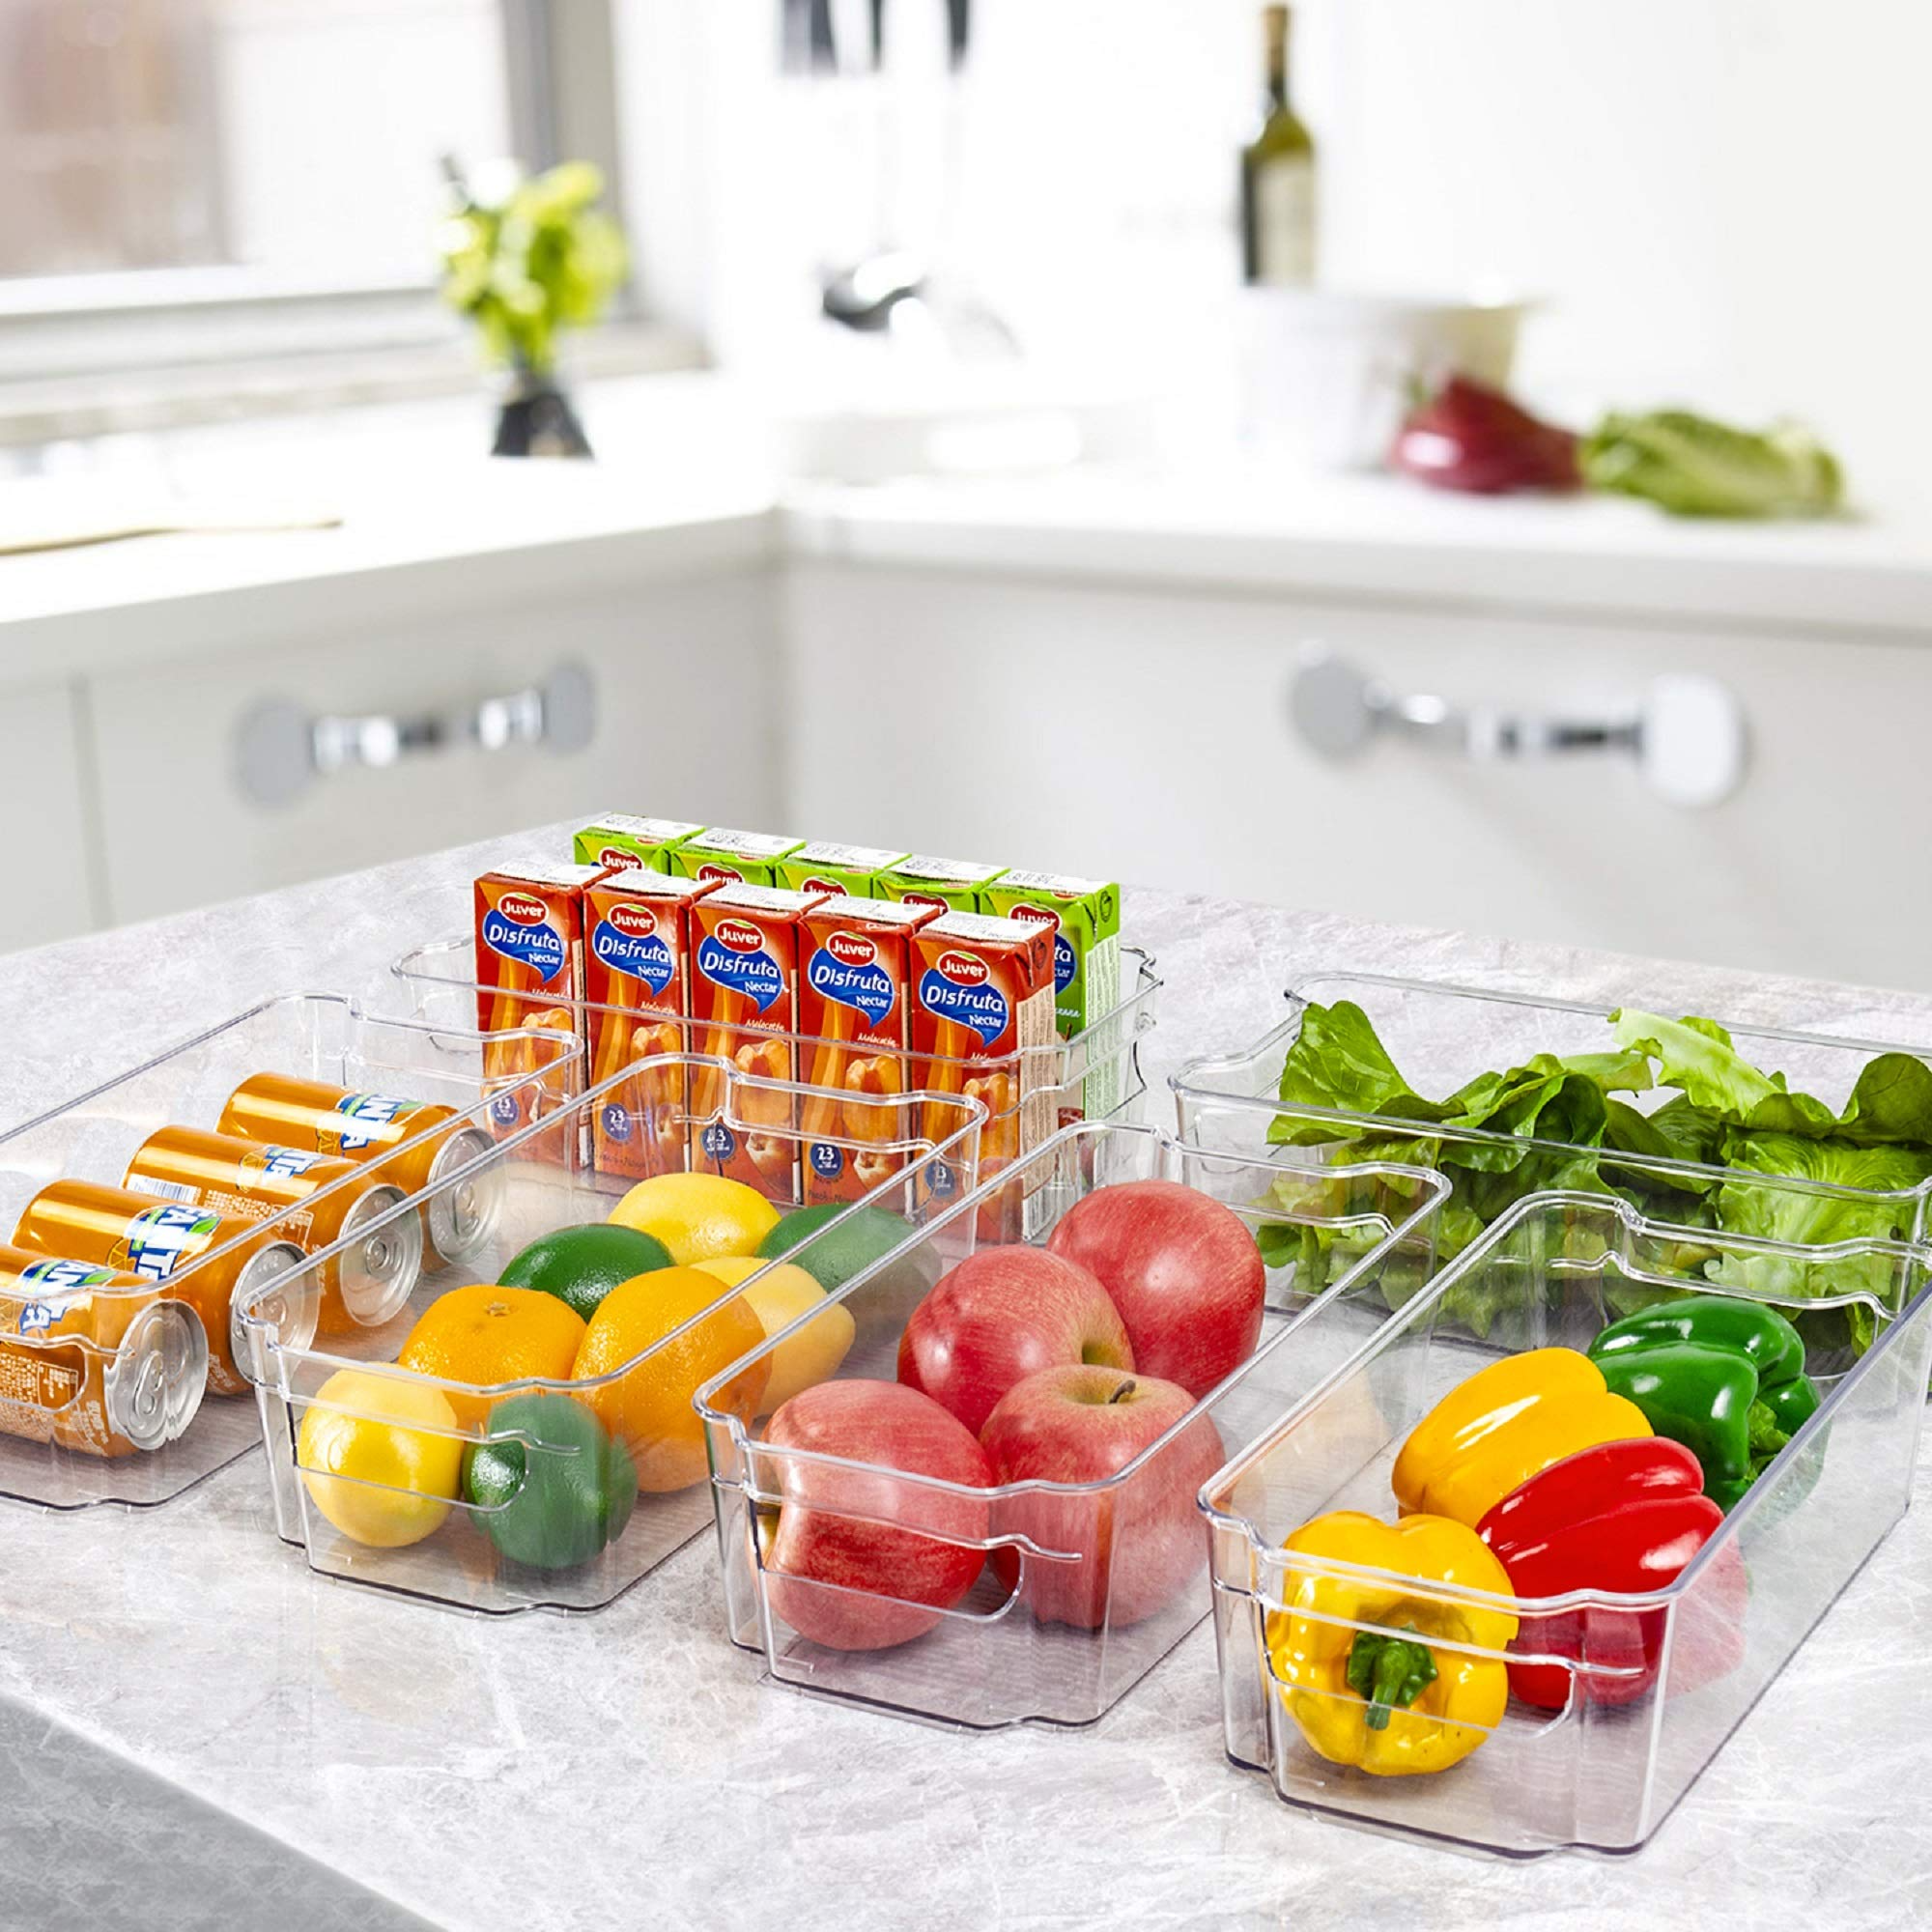 HOOJO Refrigerator Organizer Bins - 6pcs Clear Plastic Bins For Fridge,  Freezer, Kitchen Cabinet, Pantry Organization and Storage, BPA Free Fridge  Organizer, 12.5 Long-Medium